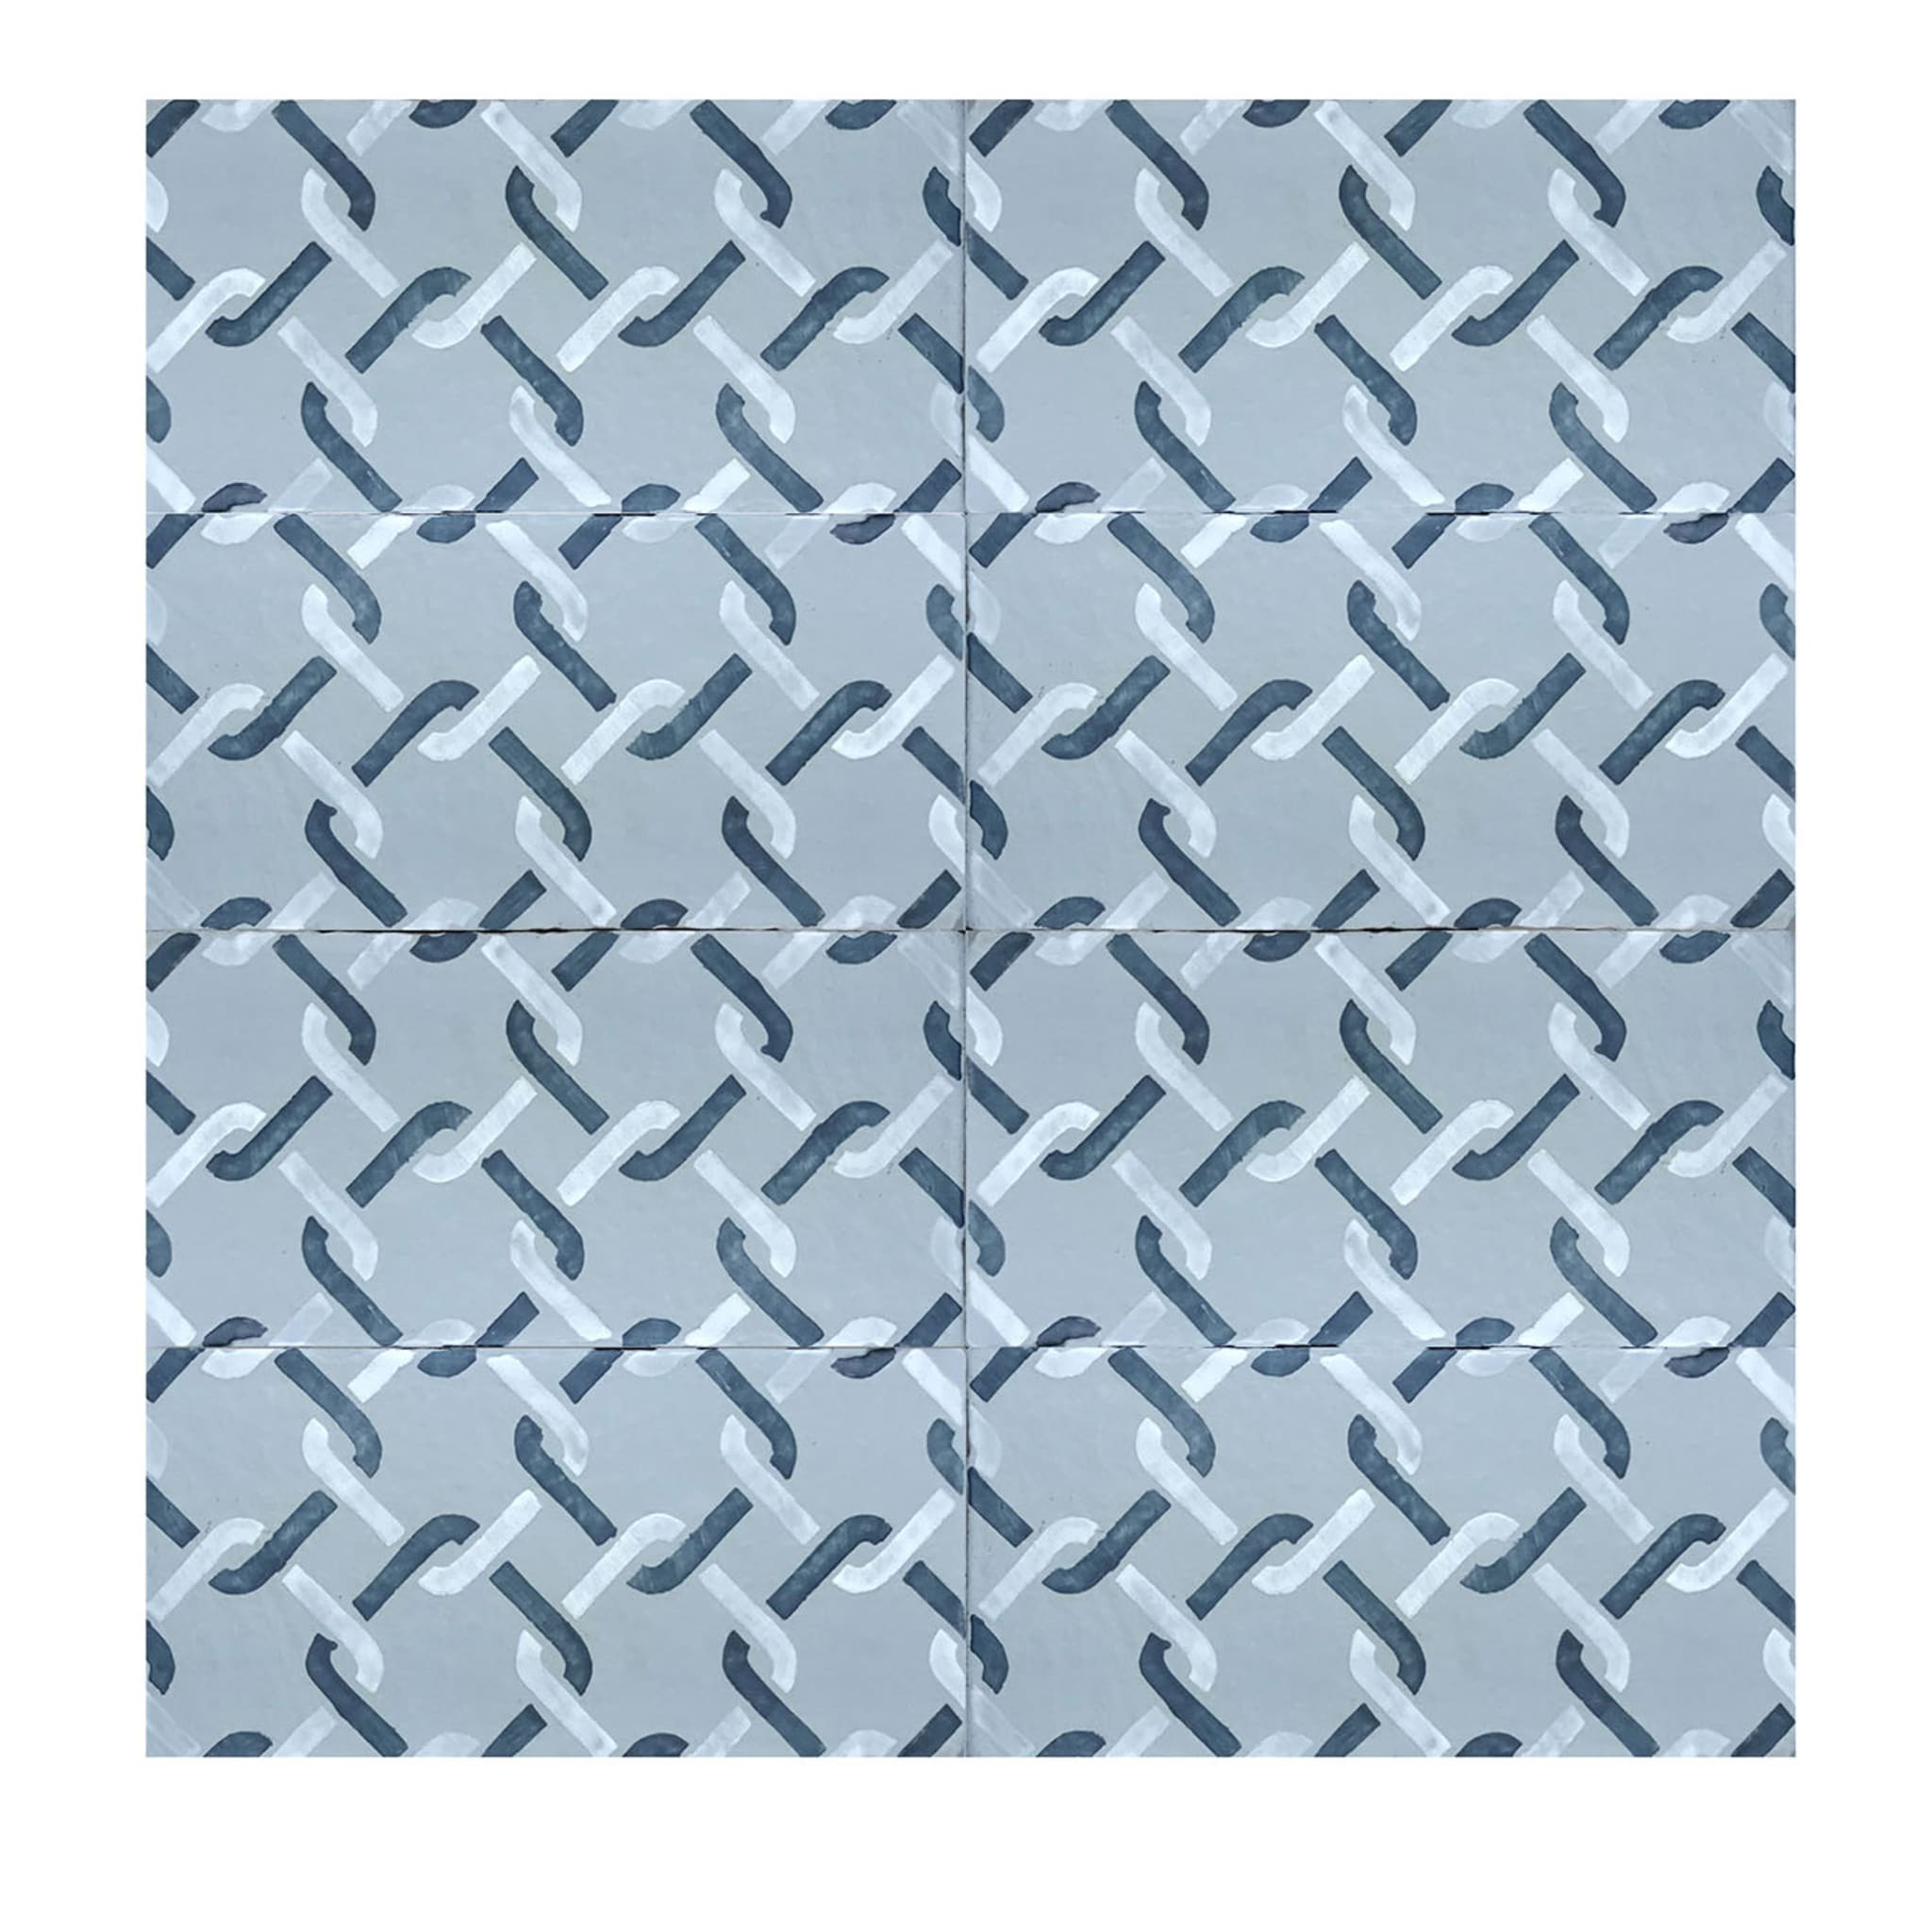 Daamè Set of 50 Rectangular Light-Blue Tiles #1 - Main view